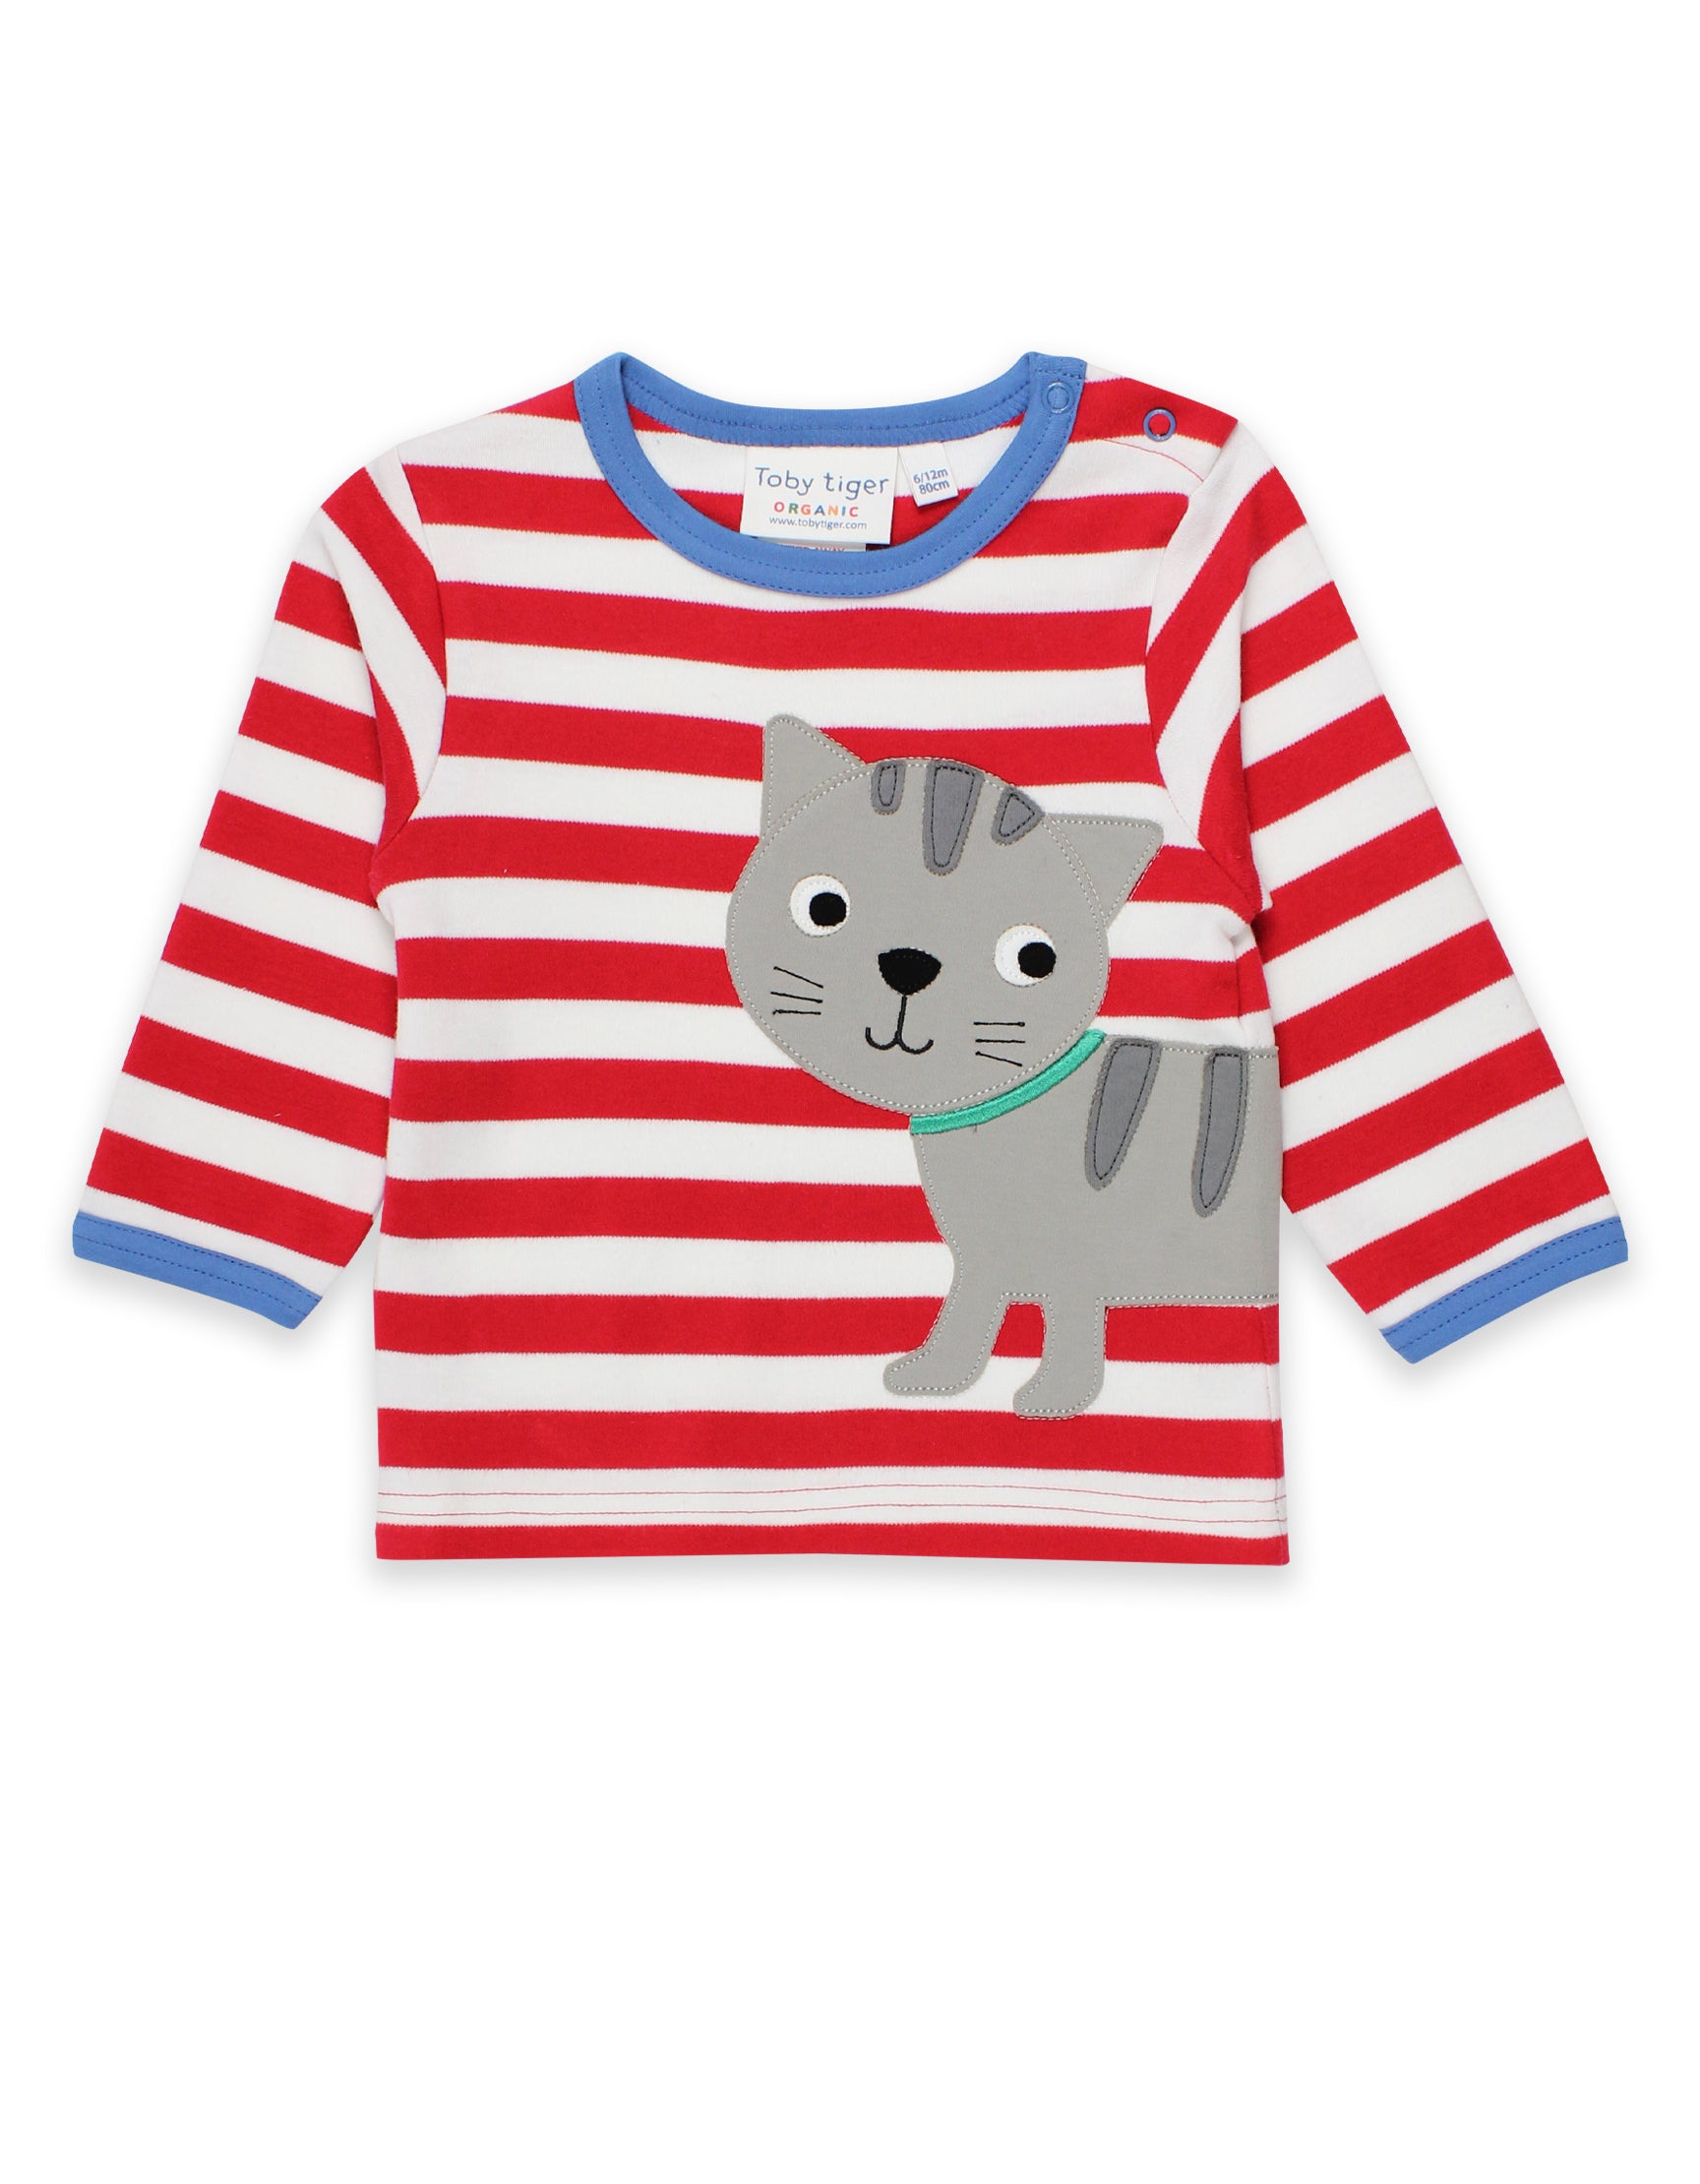 Toby Tiger Organic Long Sleeve T-Shirt - Tabby Cat Applique